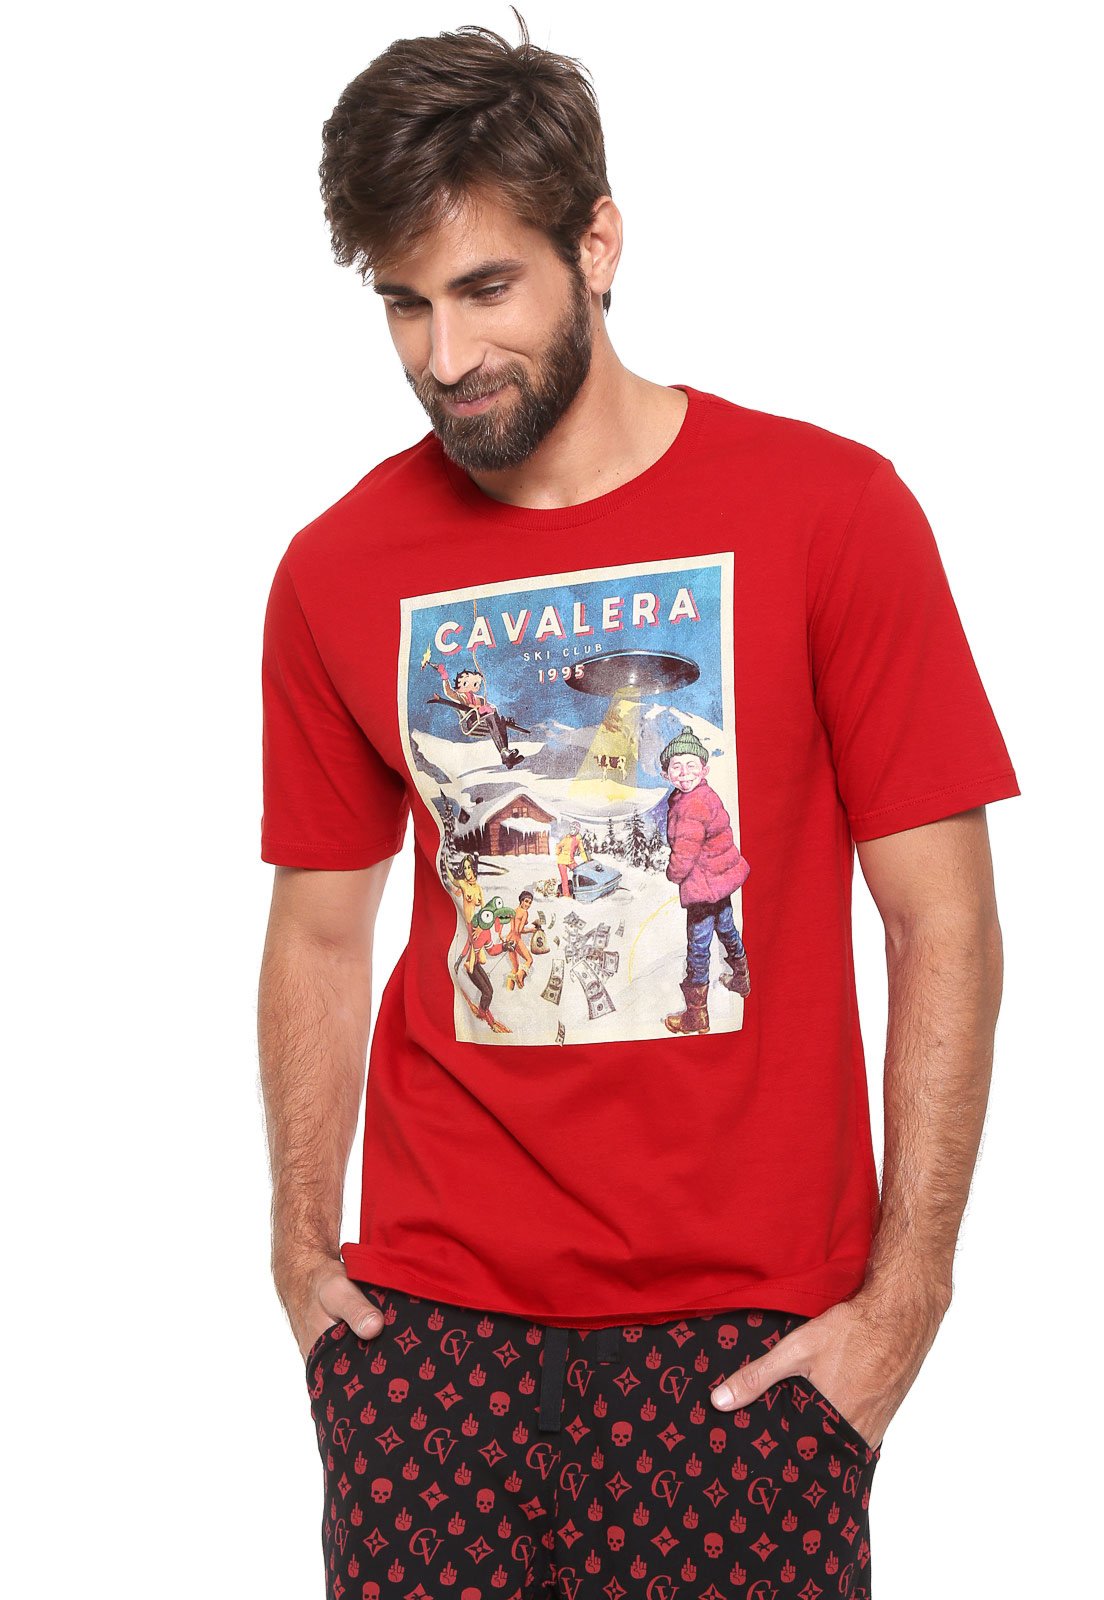 Camiseta Cavalera Estampada Vermelha - Compre Agora, cavalera camisetas 